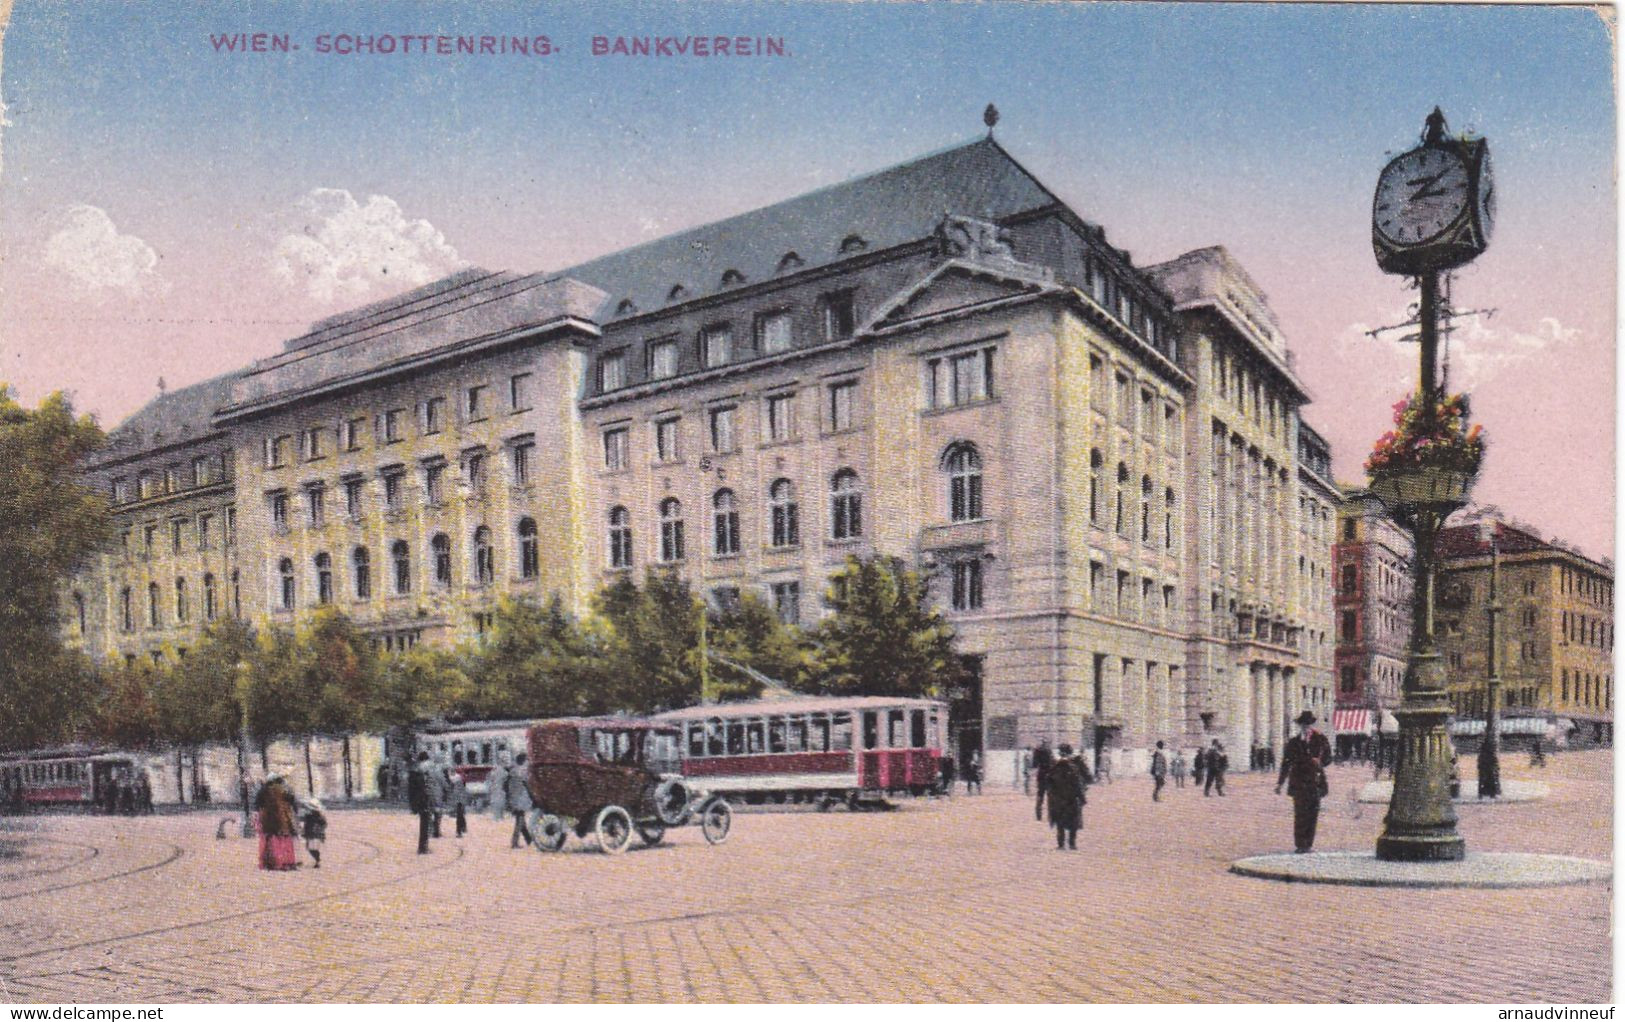 WIEN SCHOTTENRING BANKVEREIN - Wien Mitte